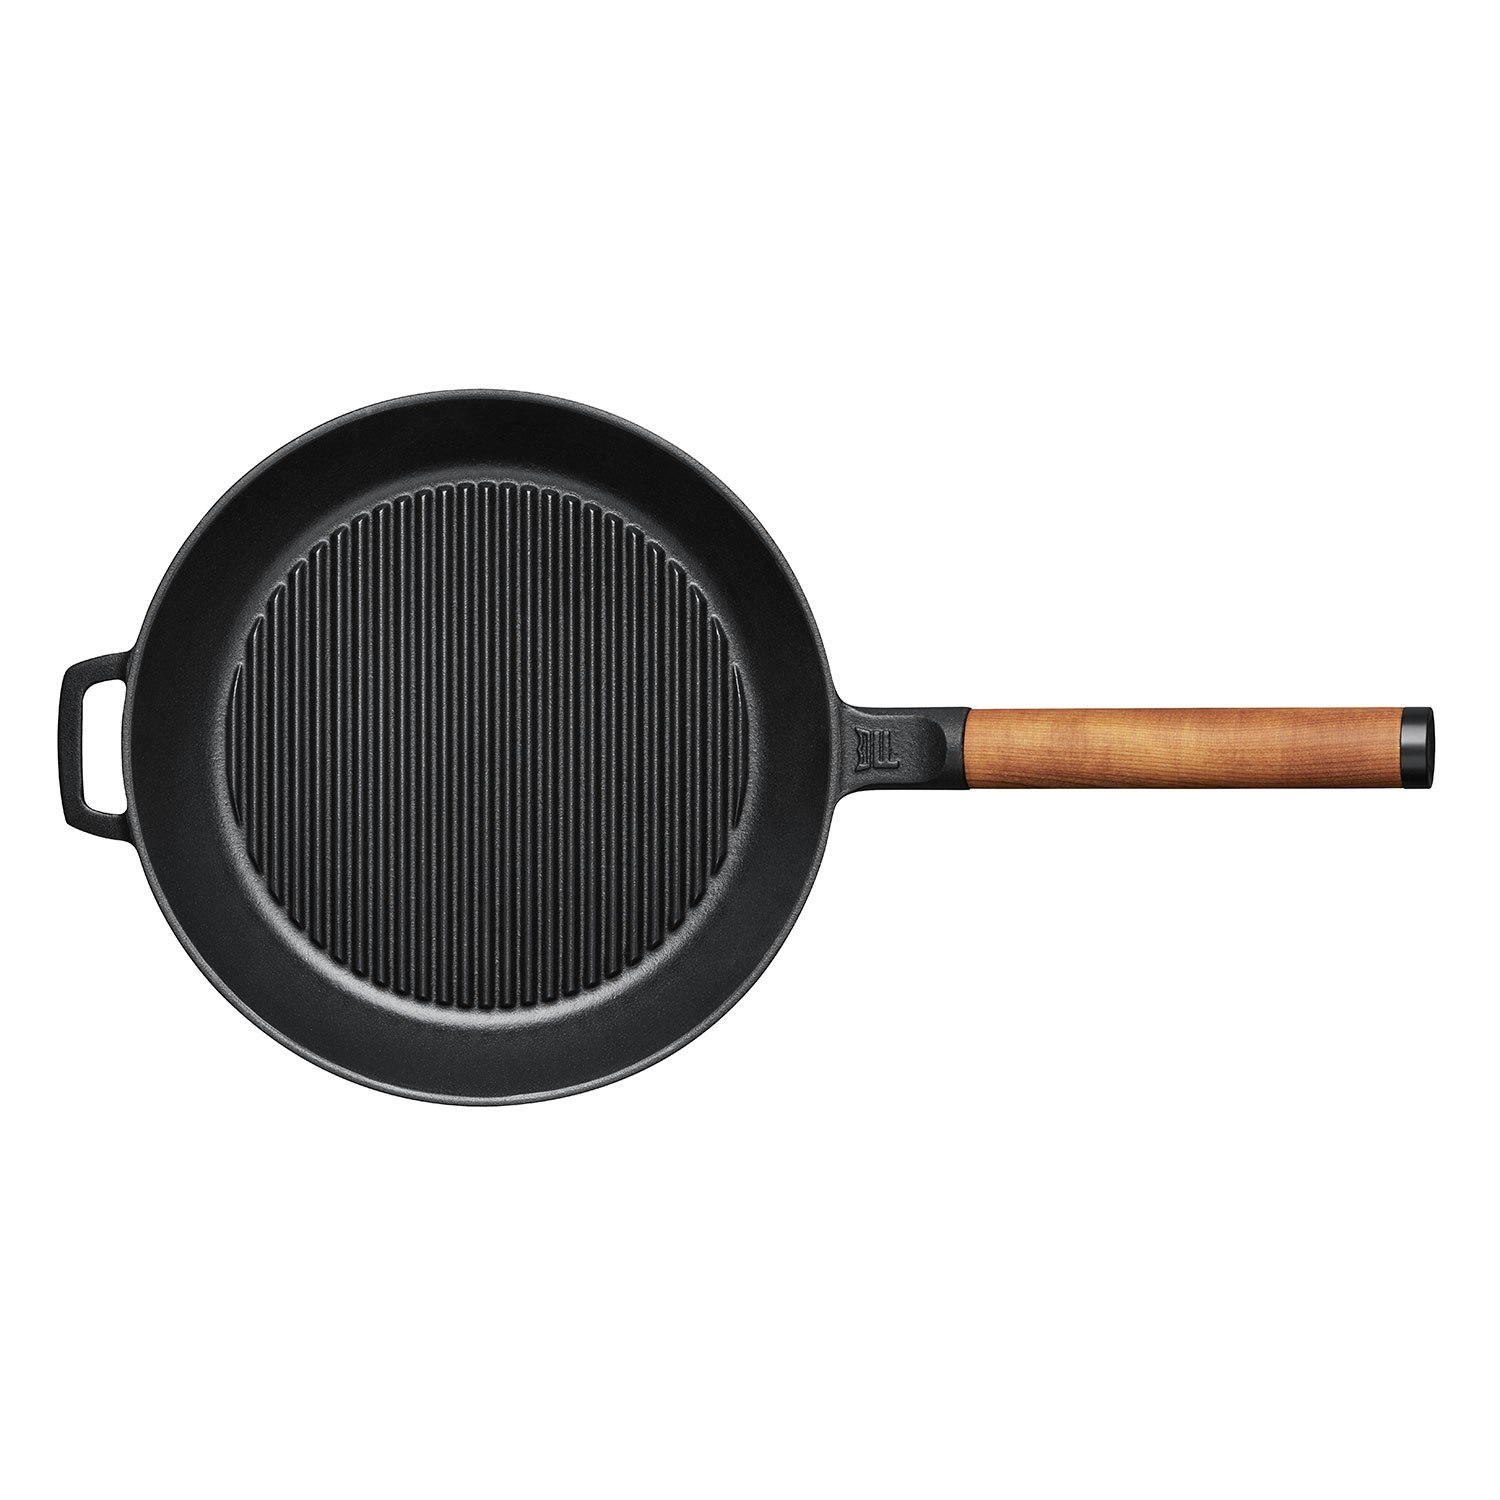 https://royaldesign.com/image/2/fiskars-norden-grill-pan-cast-iron-3